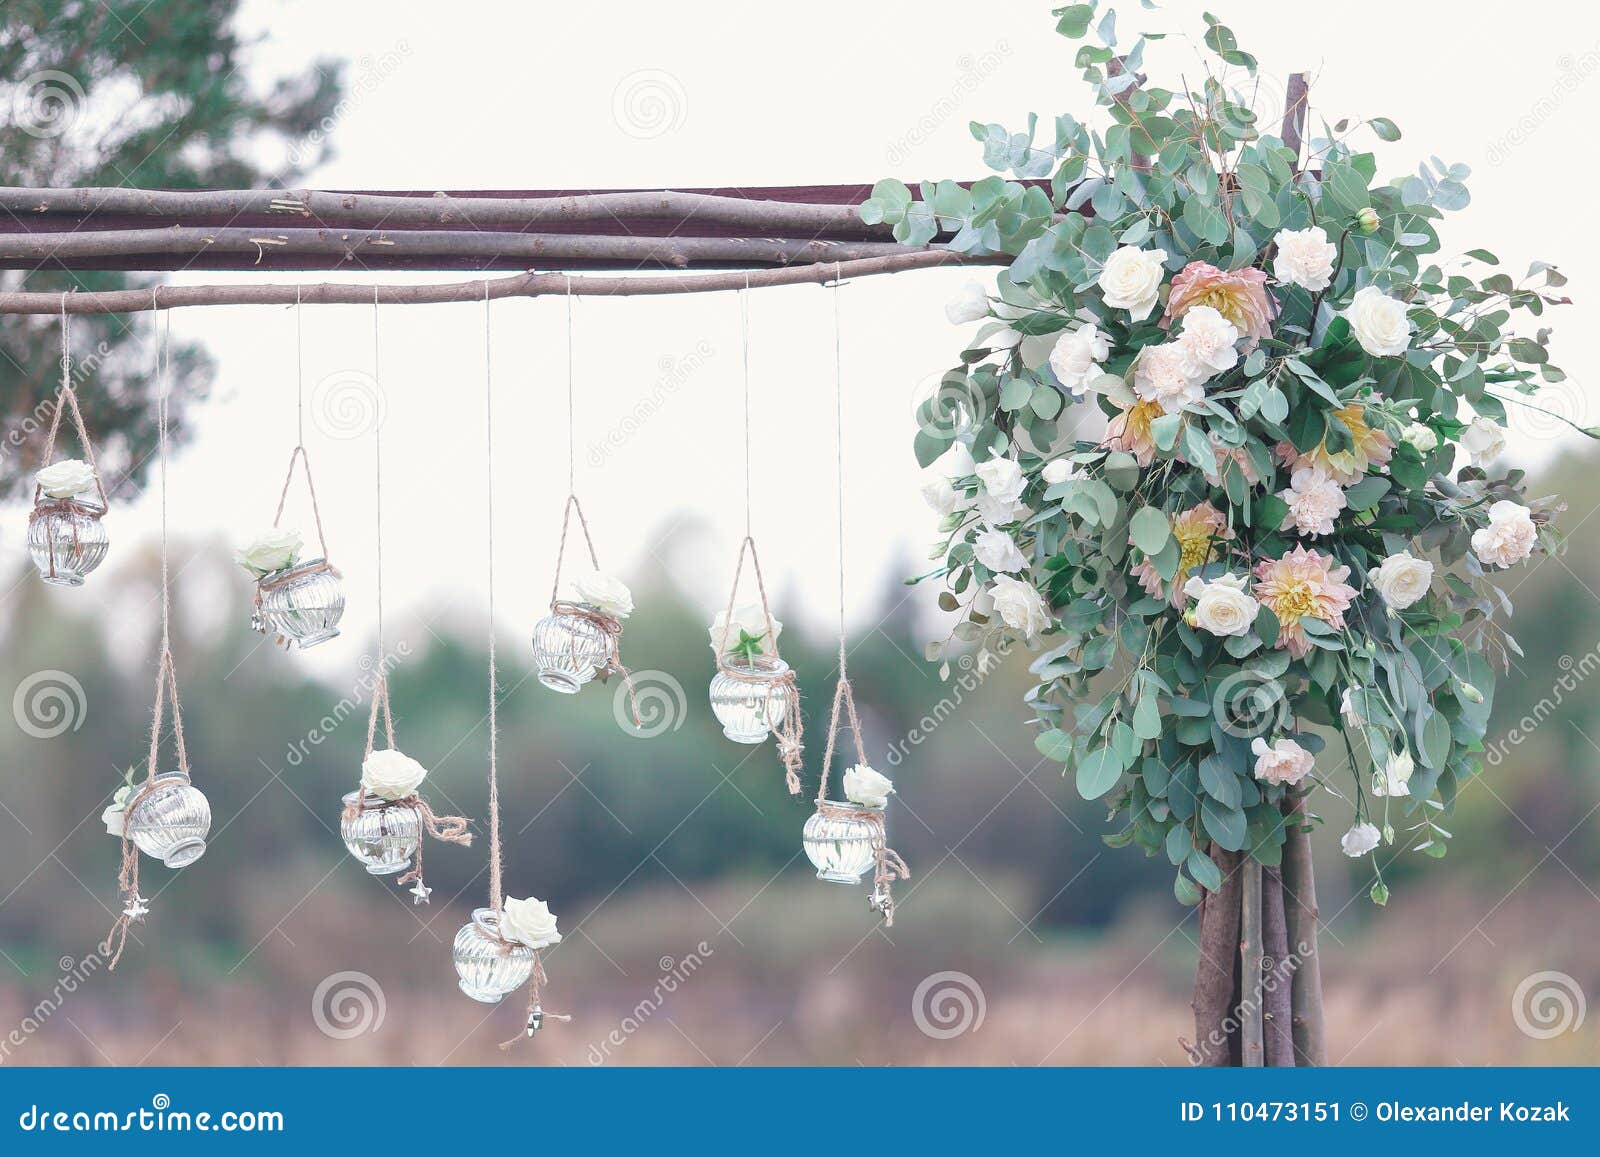 Original Wedding Floral Decoration In The Form Of Mini Vases